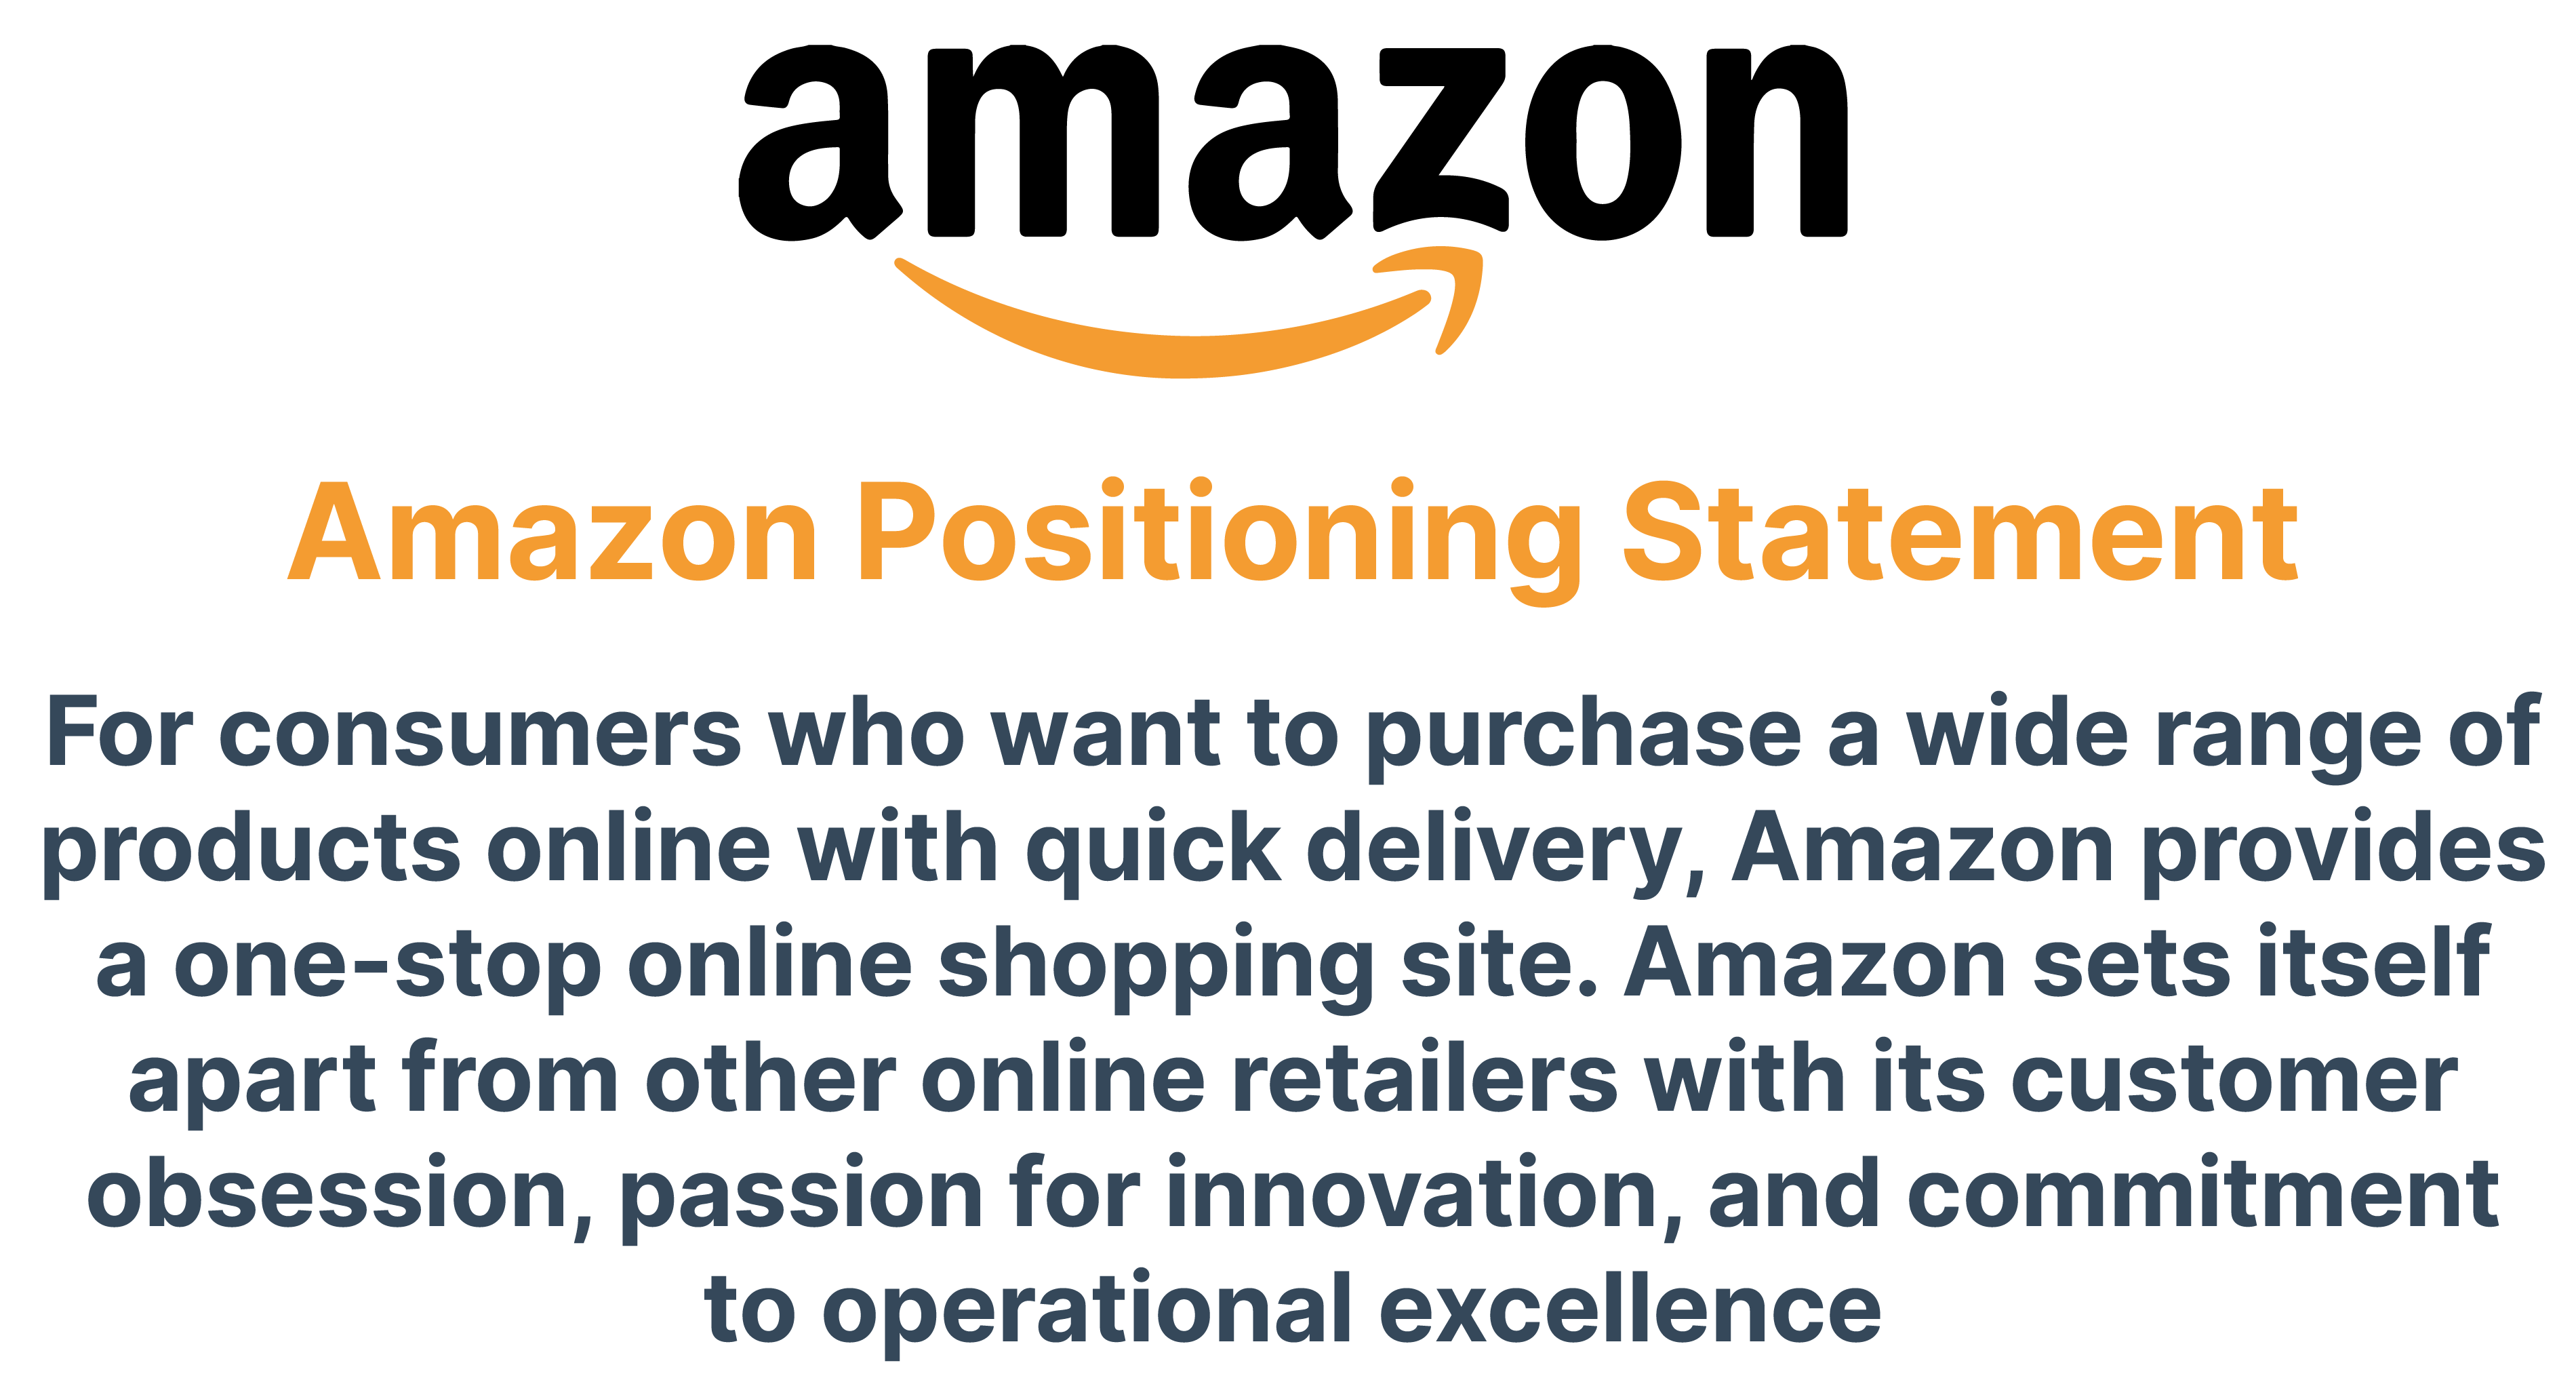 Amazon brand positioning statement